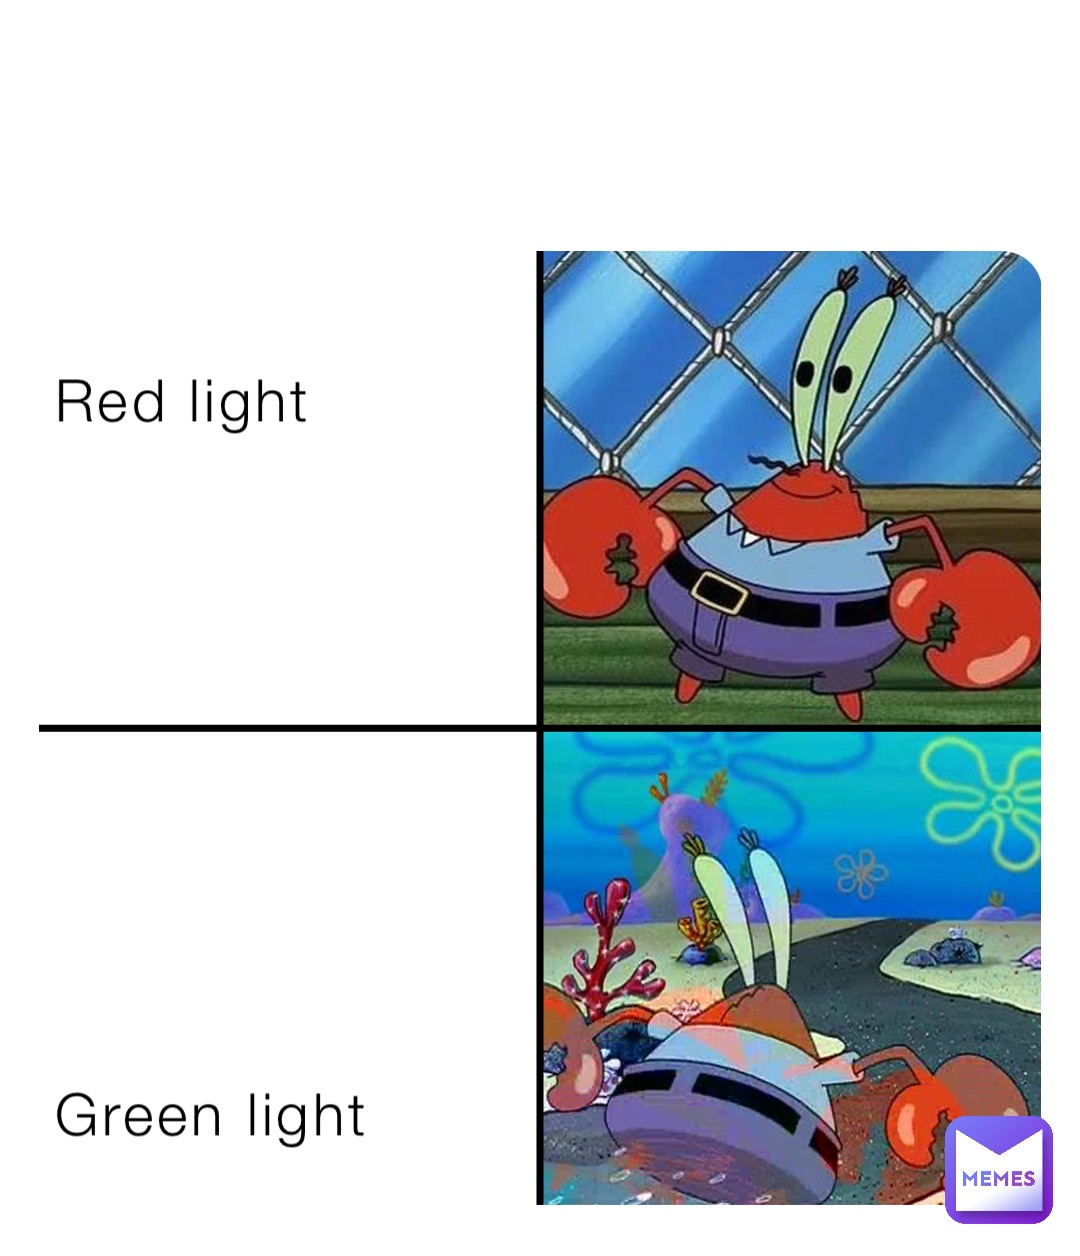 Red light









Green light